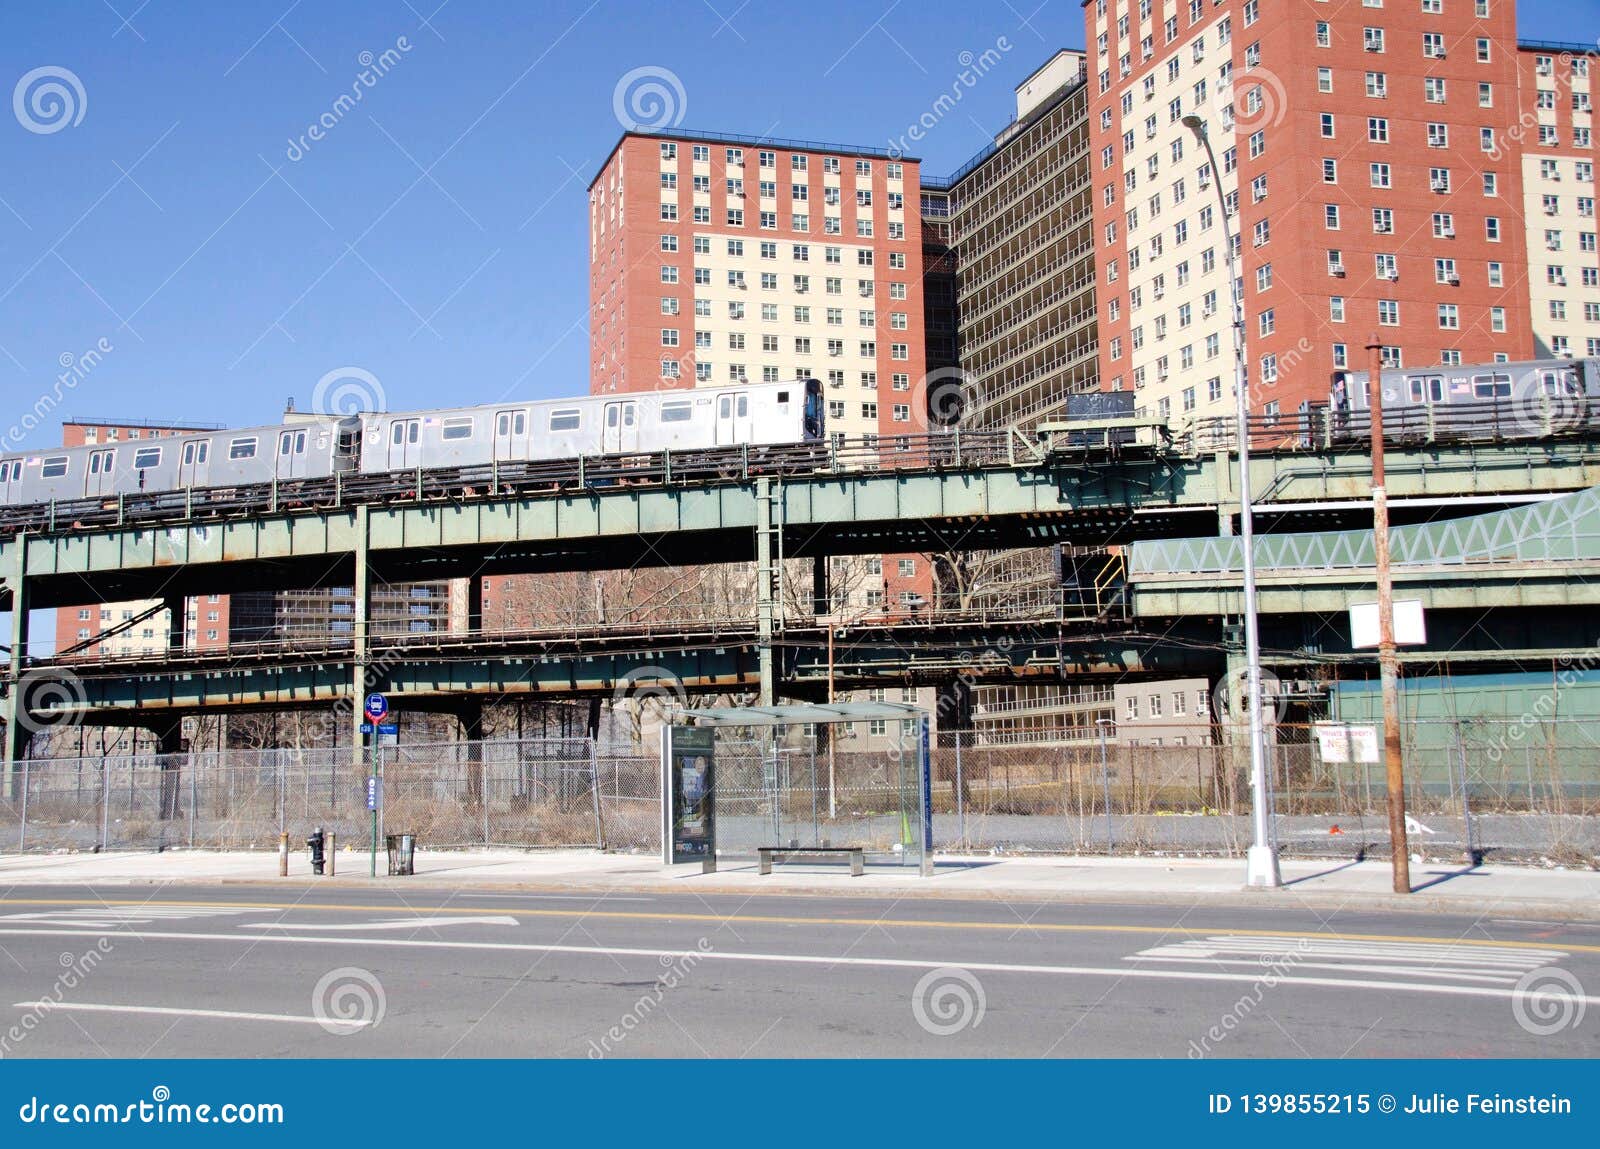 elevated-tracks-new-york-city-subway-system-bear-trains-to-popular-summer-destination-coney-island-139855215.jpg